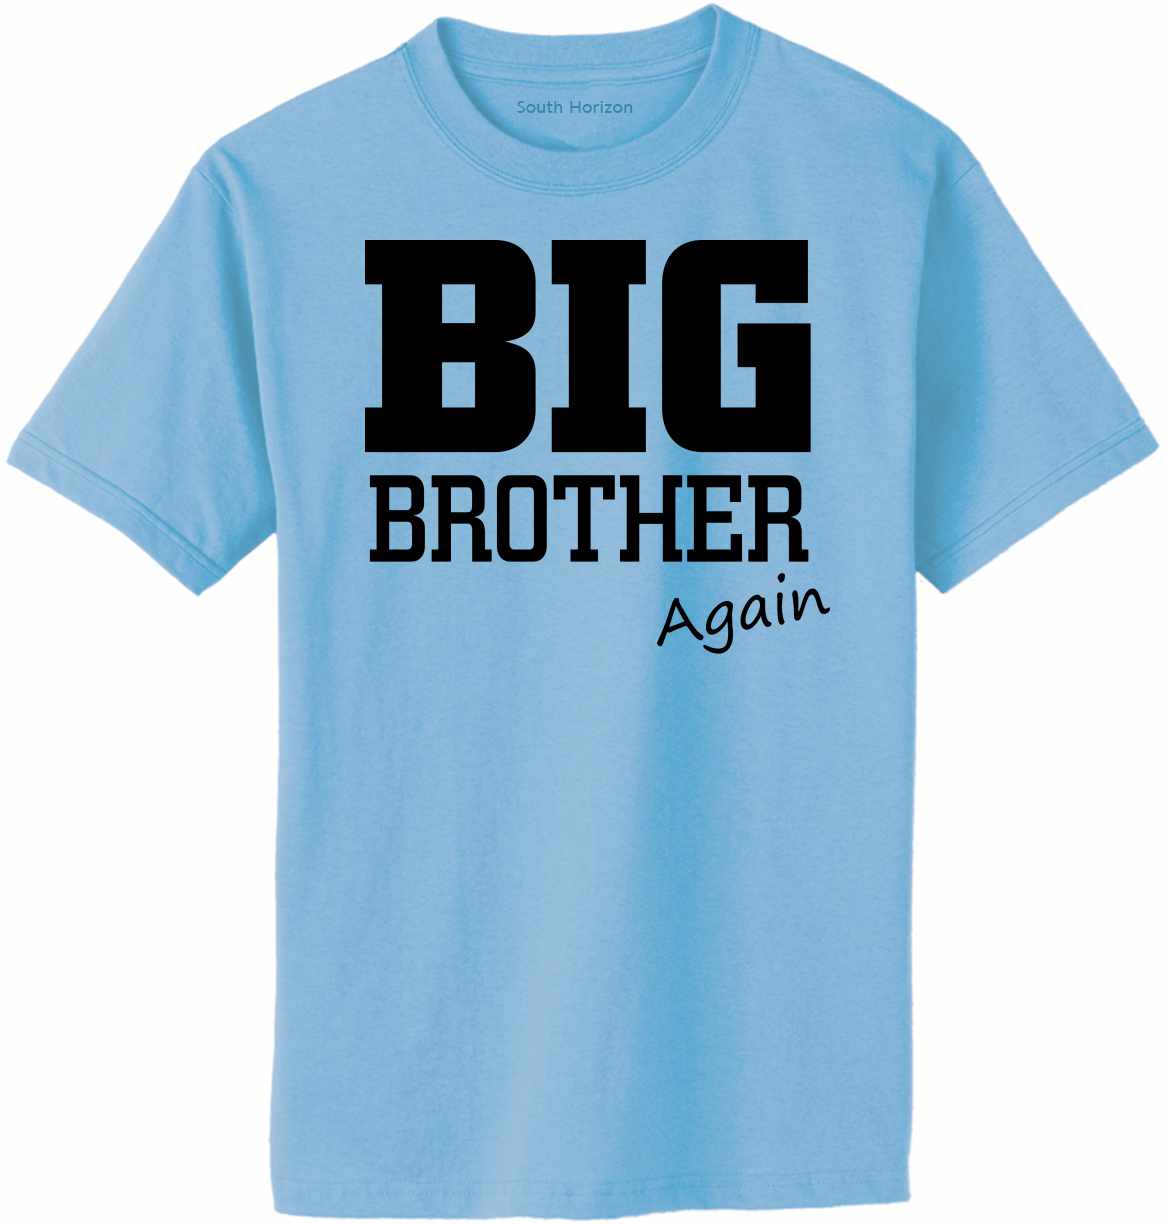 Big Brother - Again Adult T-Shirt (#1104-1)